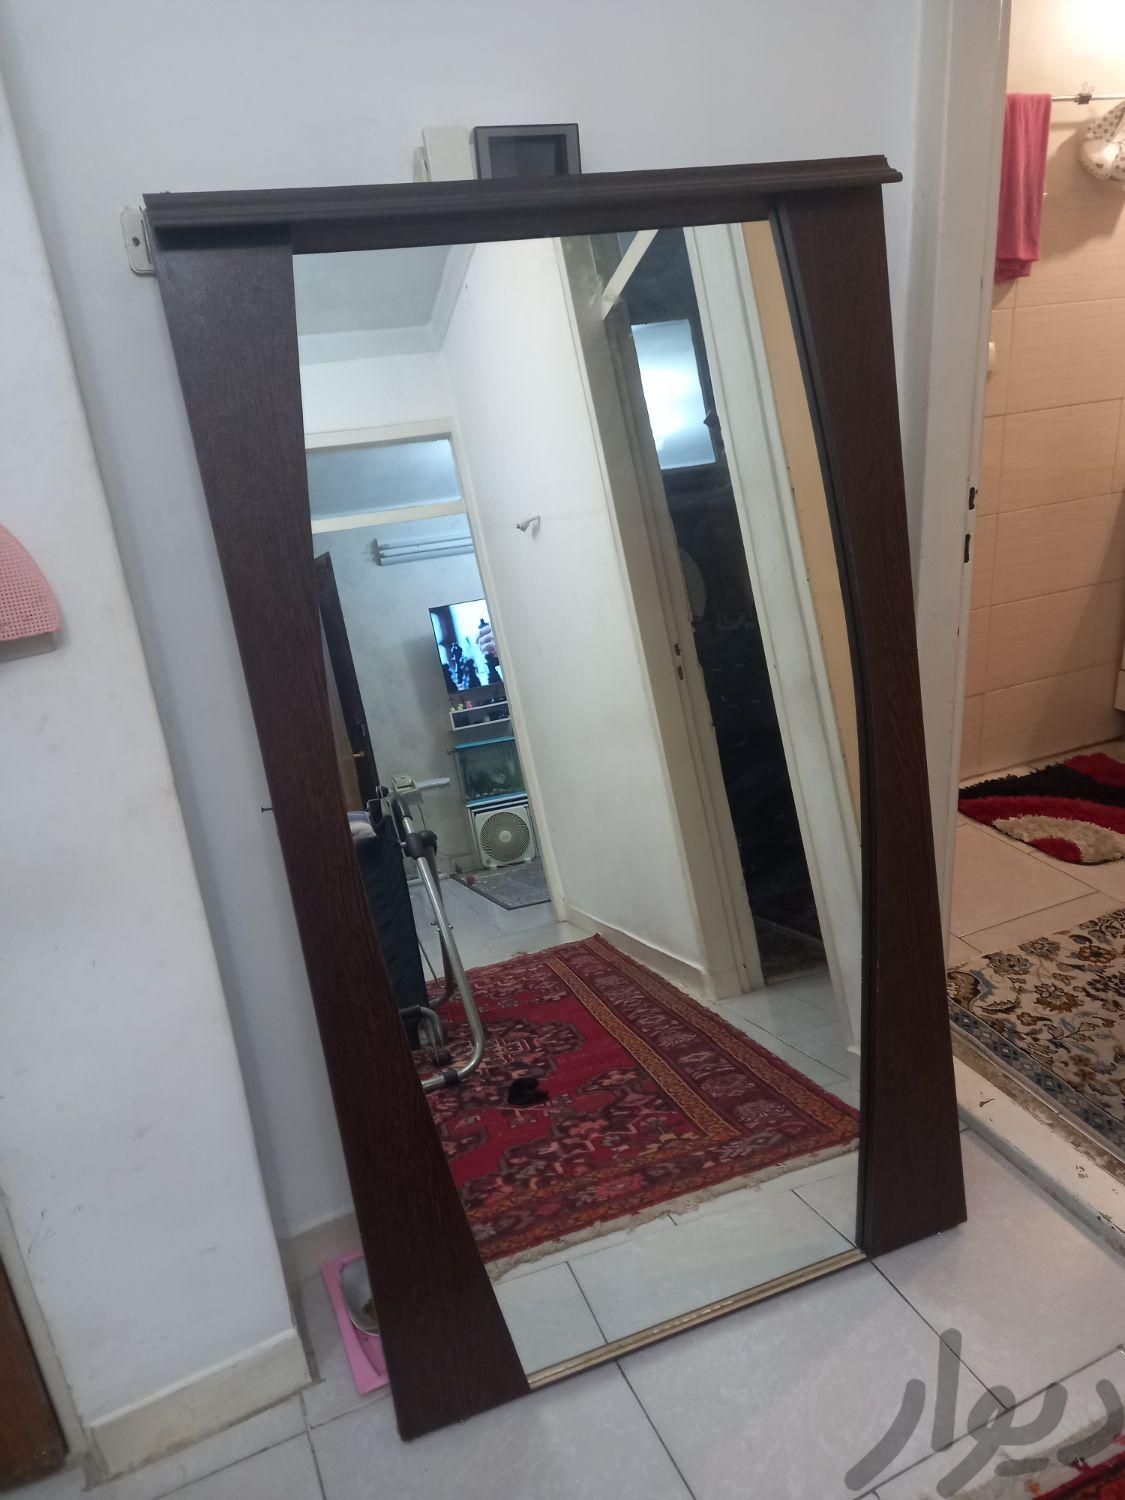 اینه|آینه|تهران, دردشت|دیوار